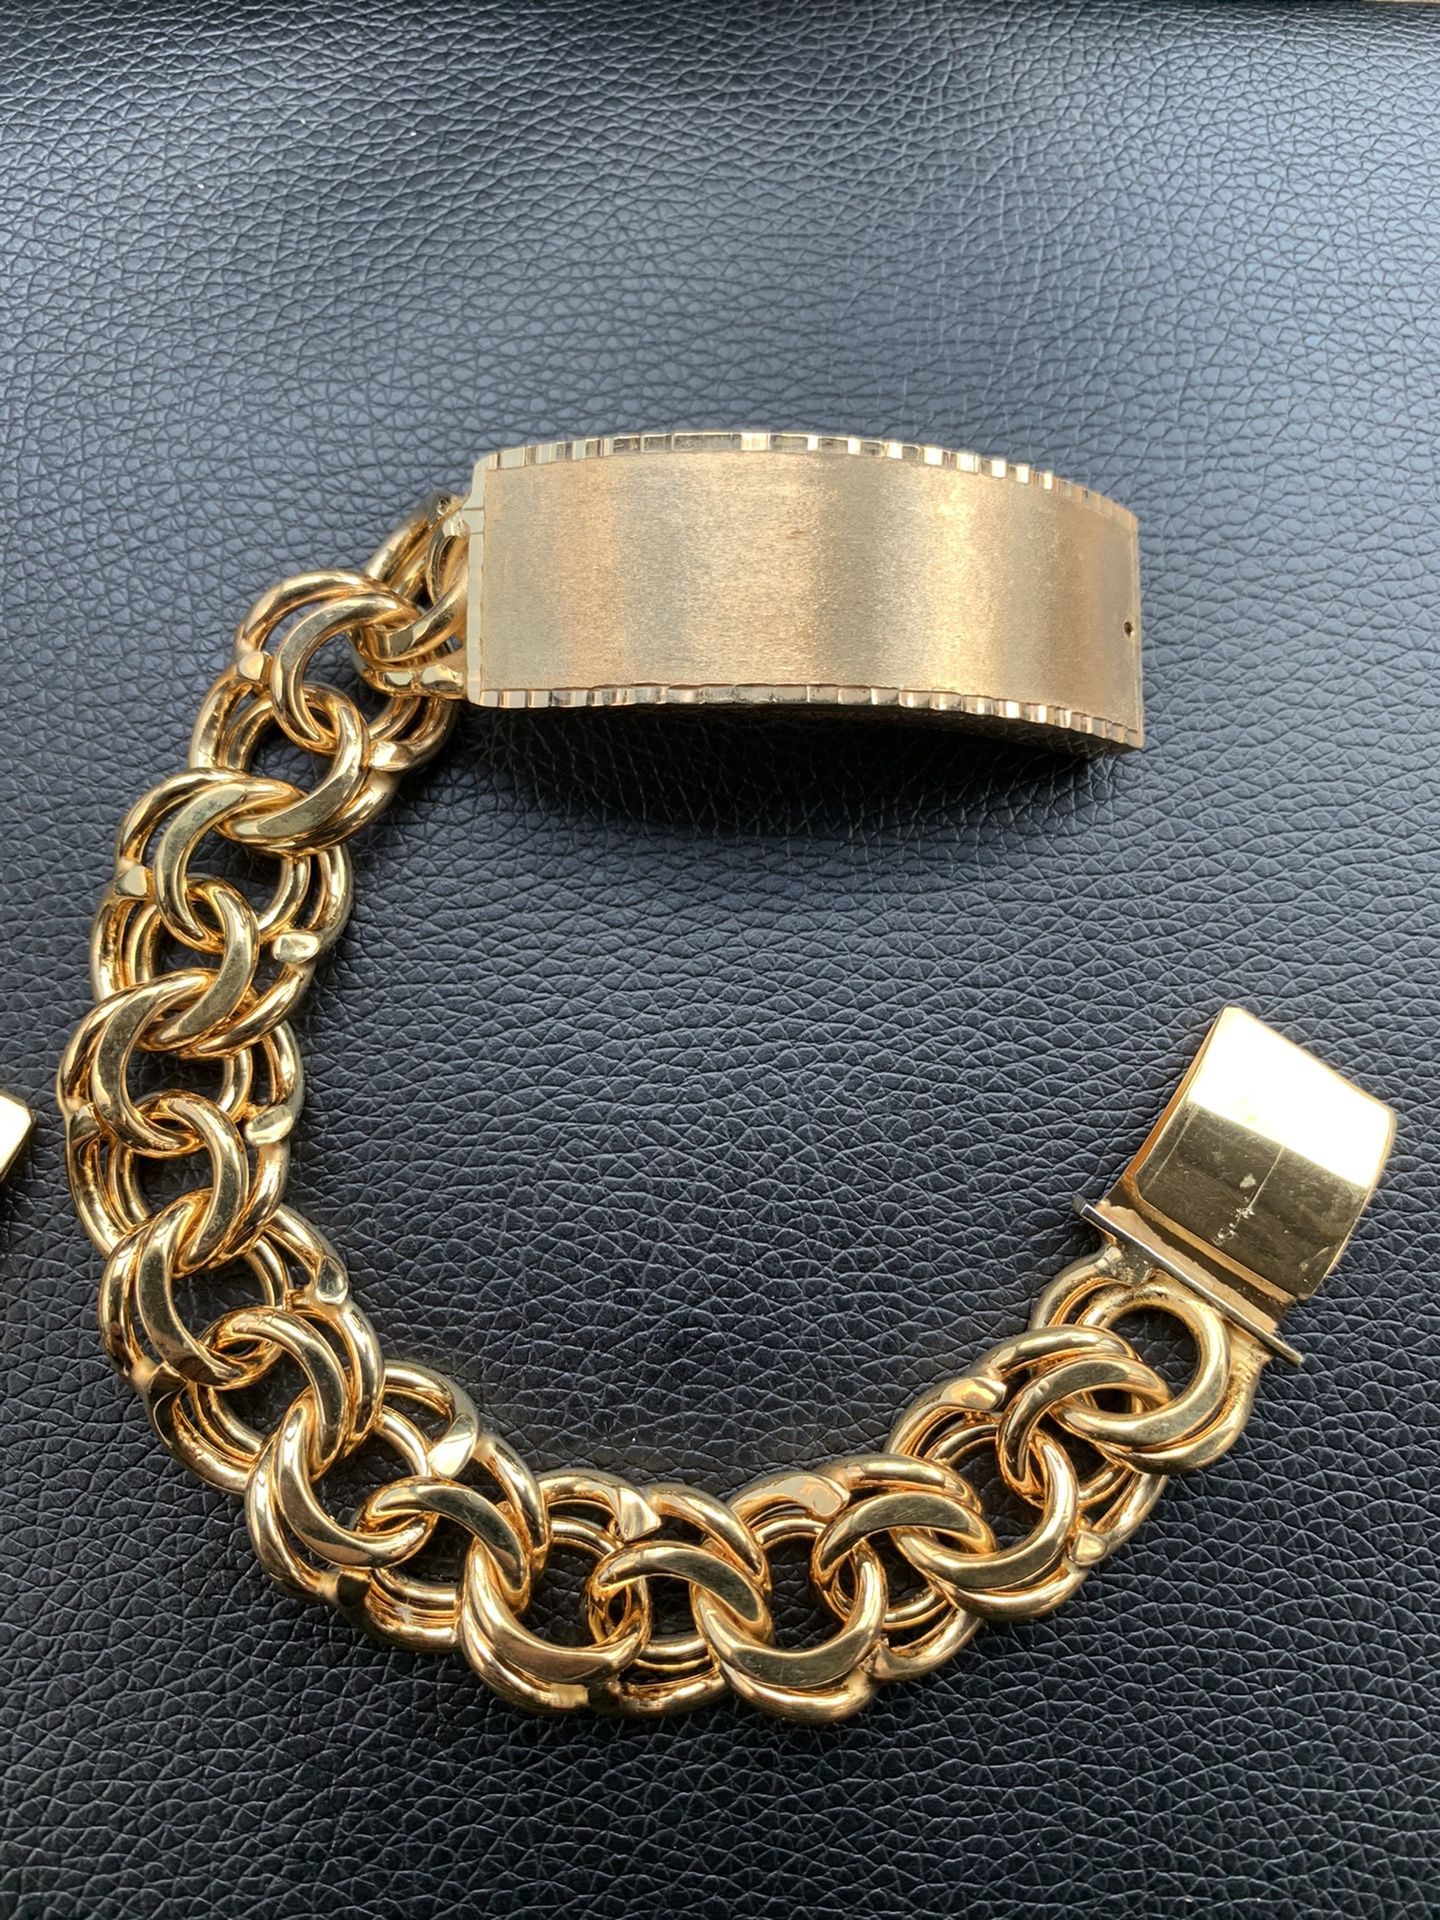 14 K gold filled custom-made Chino Link bracelet